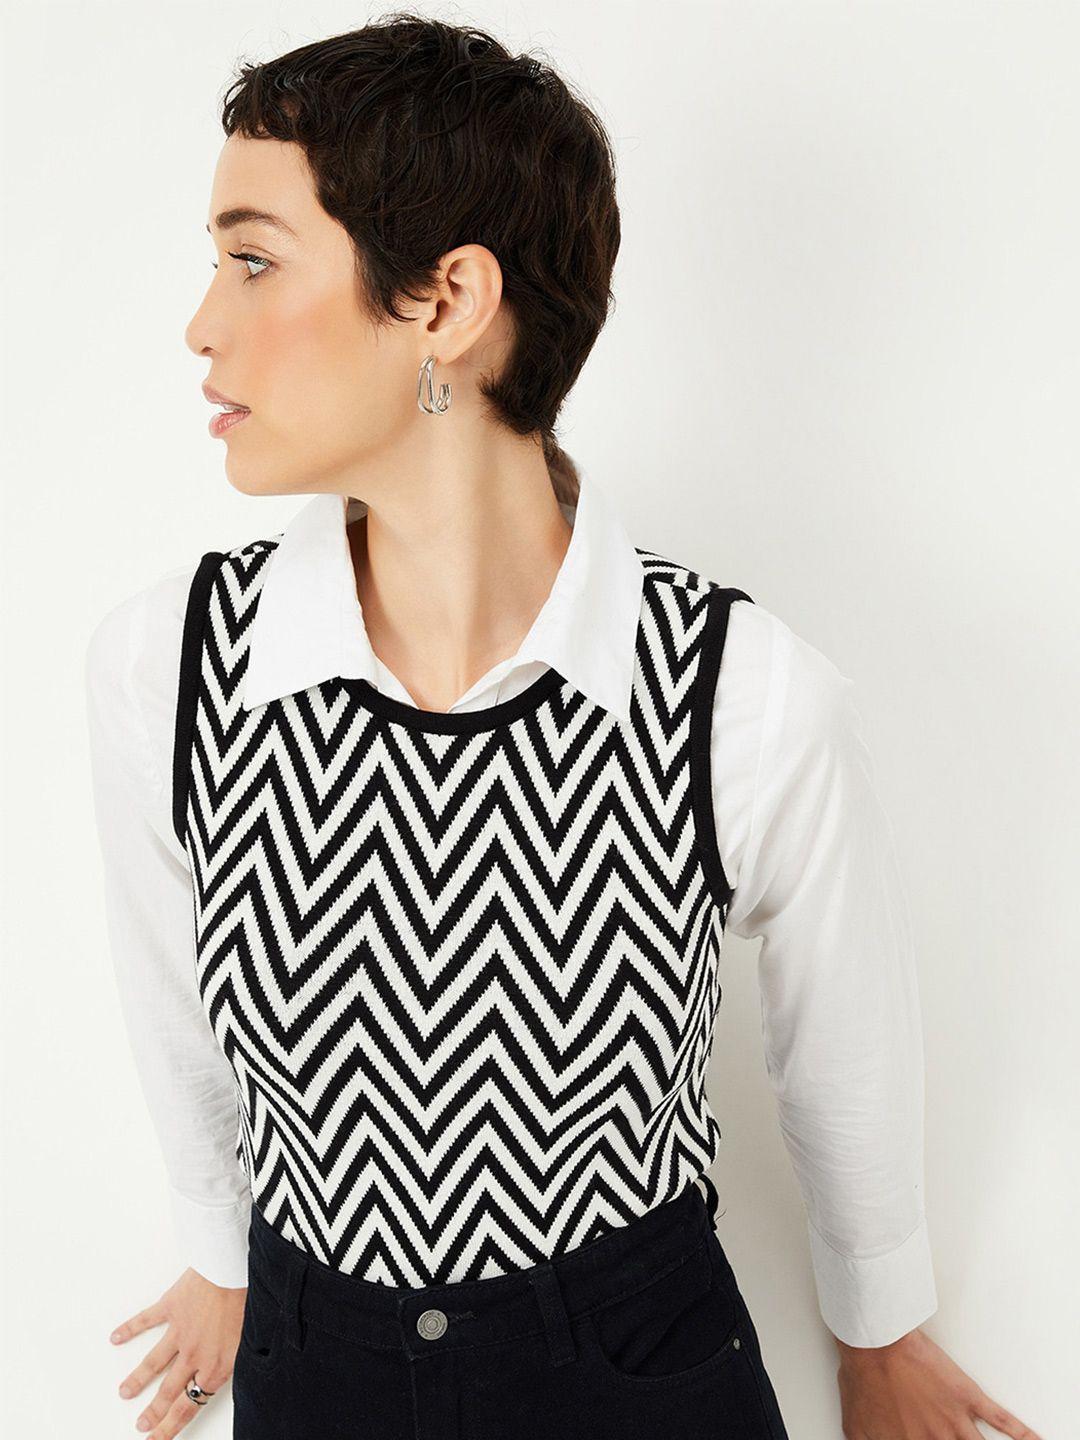 max-women-white-&-black-chevron-printed-sweater-vest